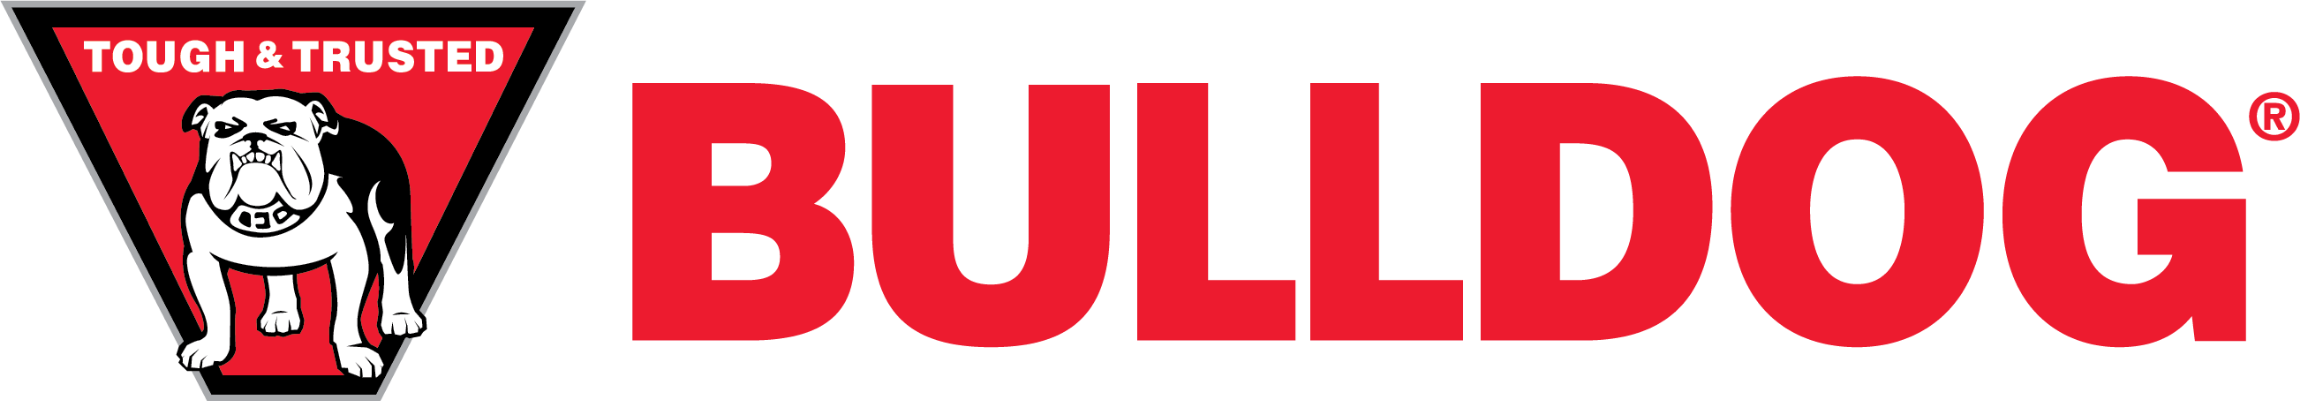 Bulldog Products